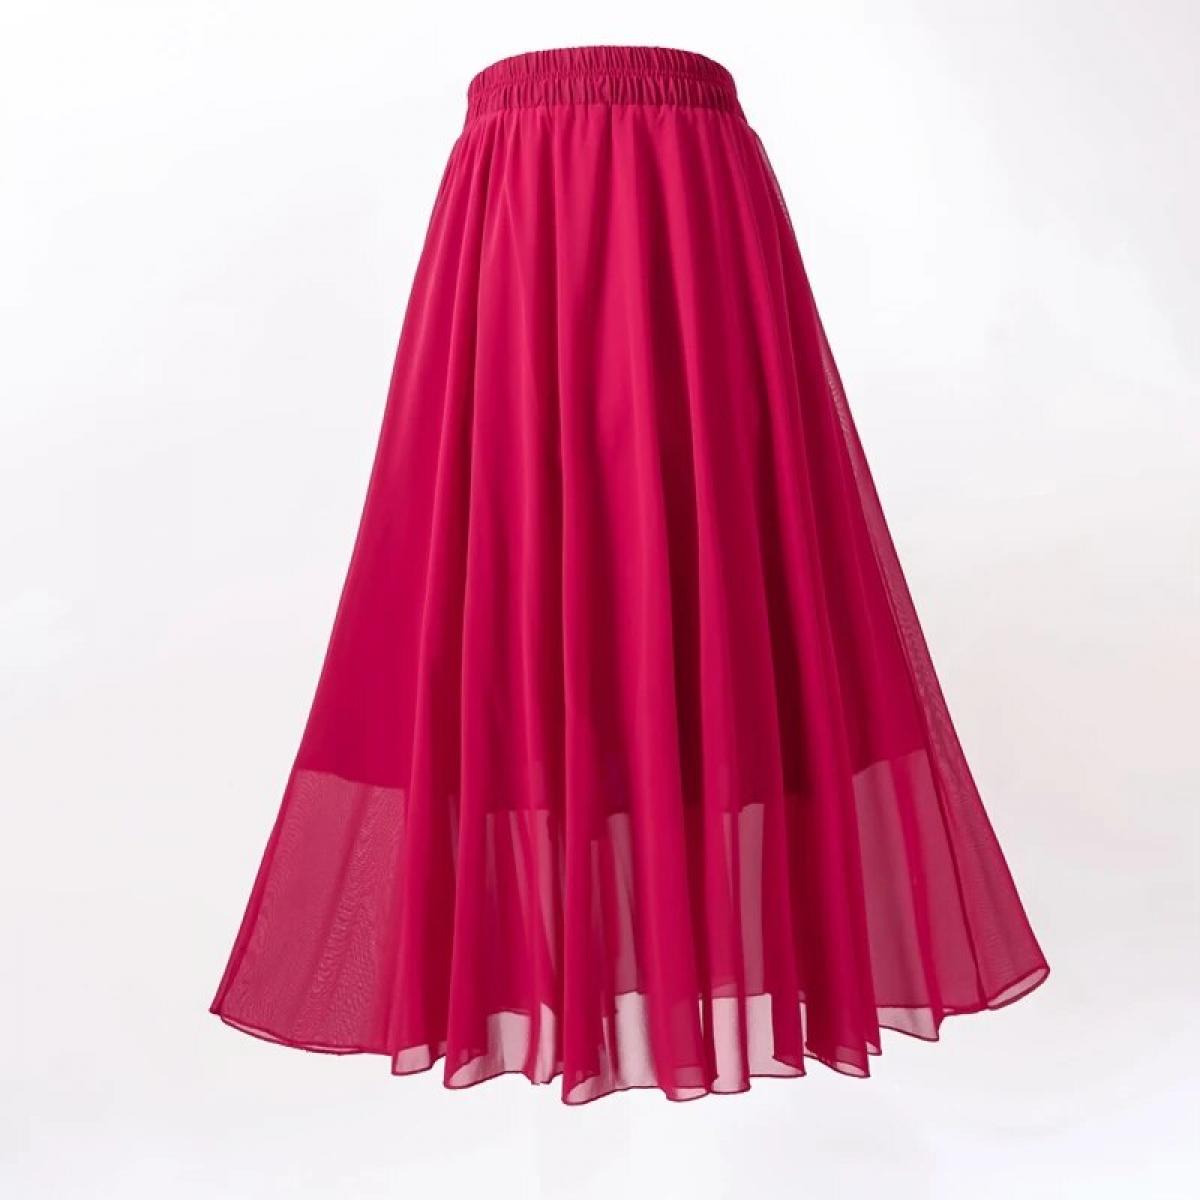 Fashion Women Long Chiffon Skirt Summer Spring A Line Skirts High Elastic Waisted Bohemian Skirt Beach Skirt Party Red S